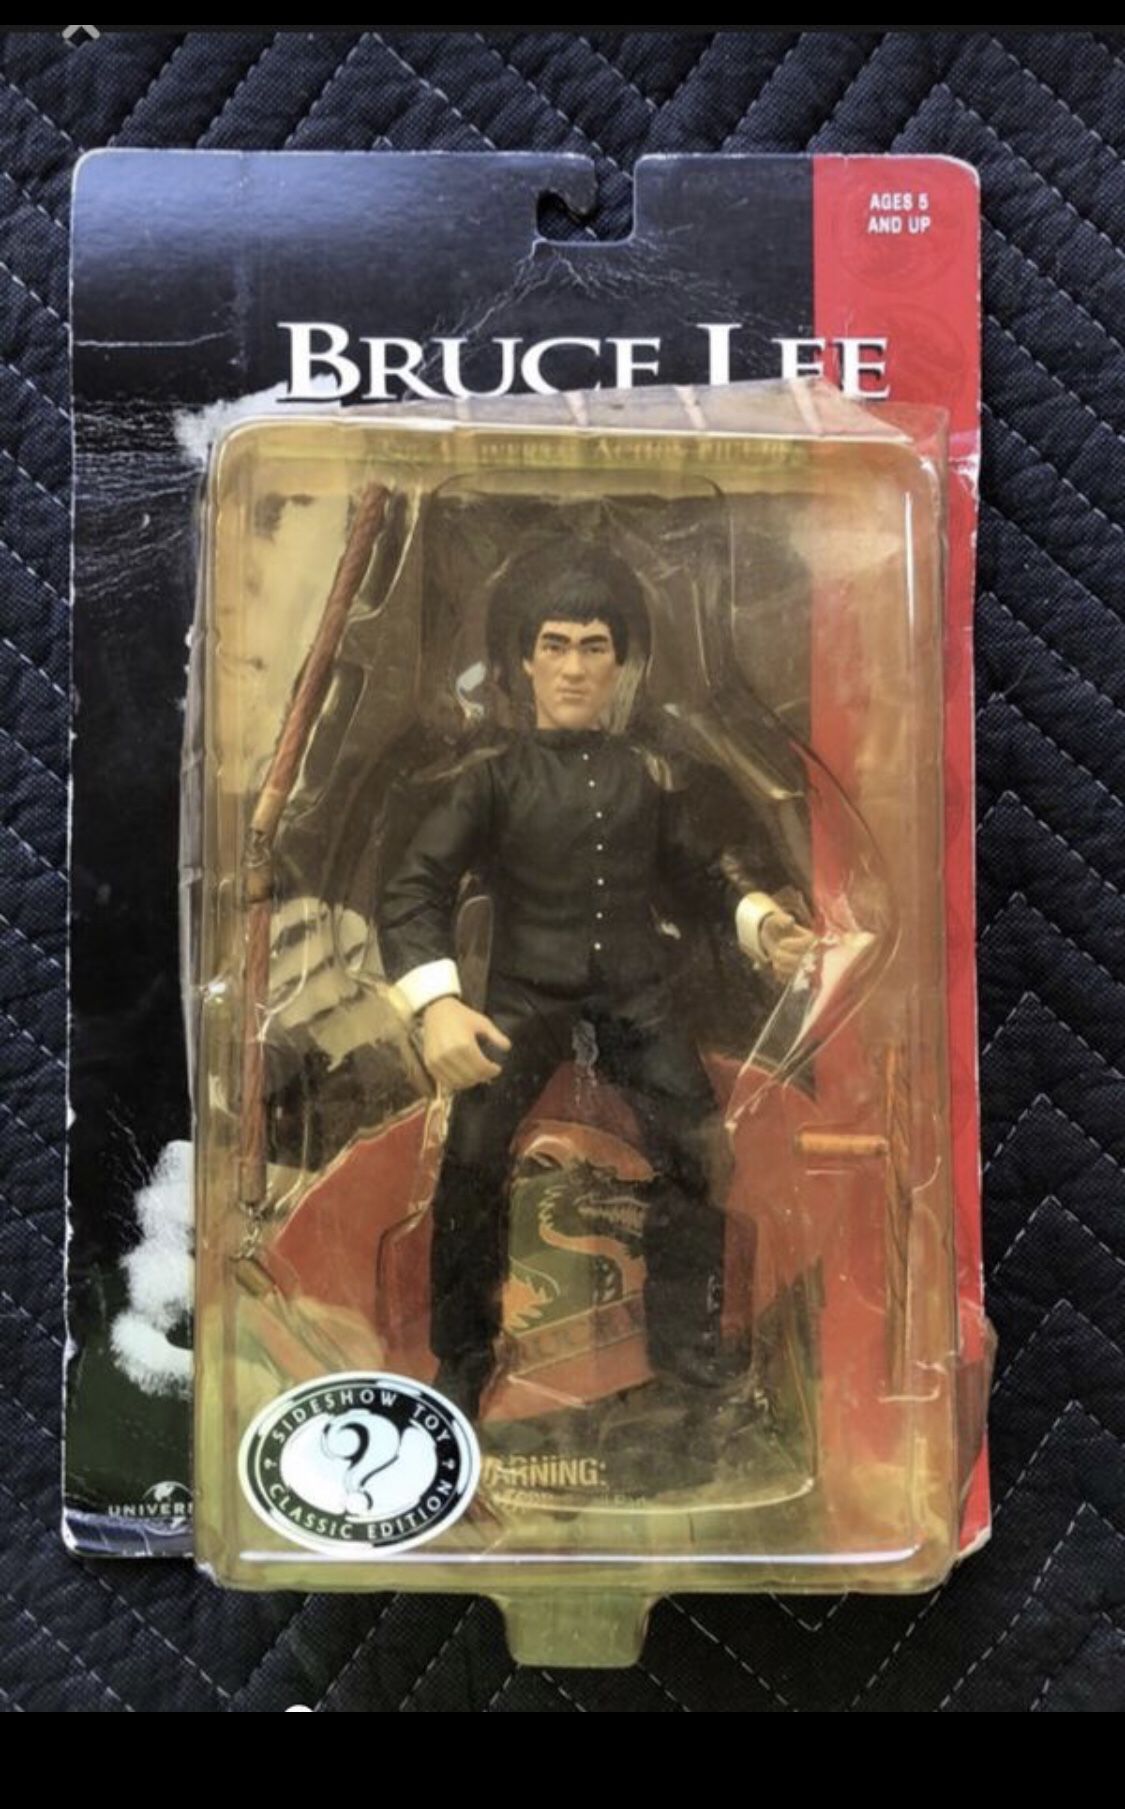 Bruce Lee action figure